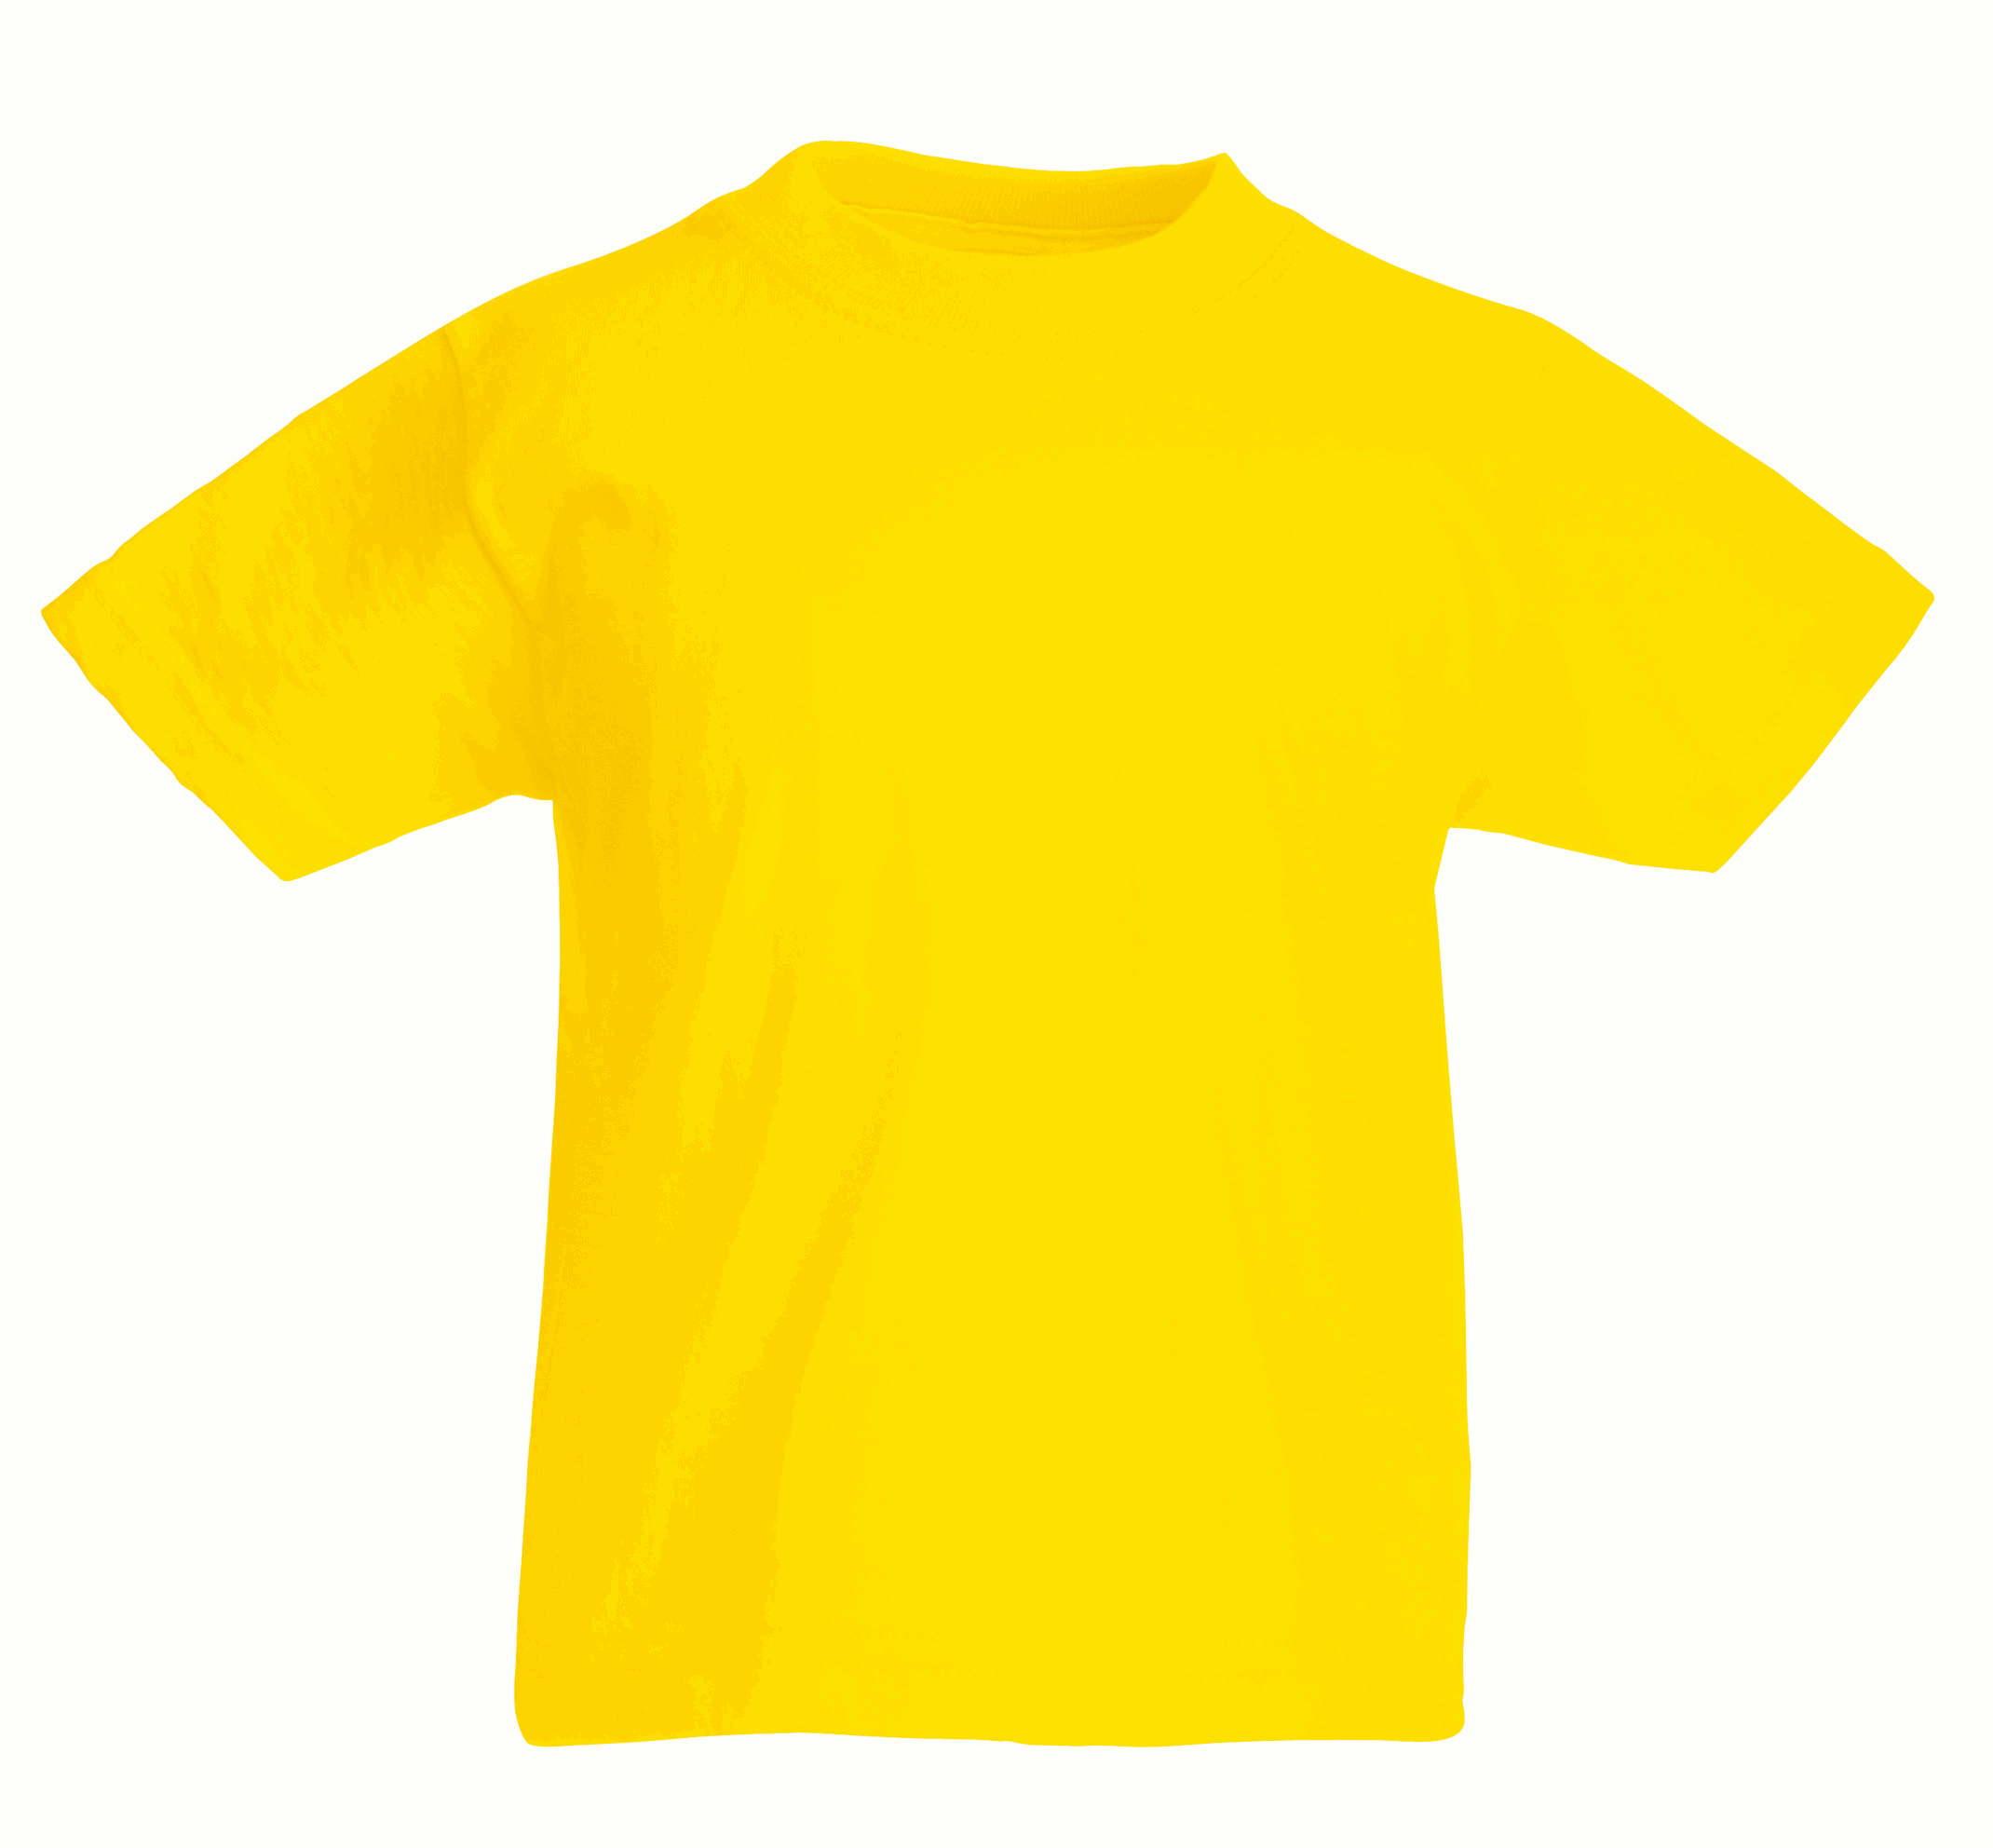 yellow shirt clip art - photo #32